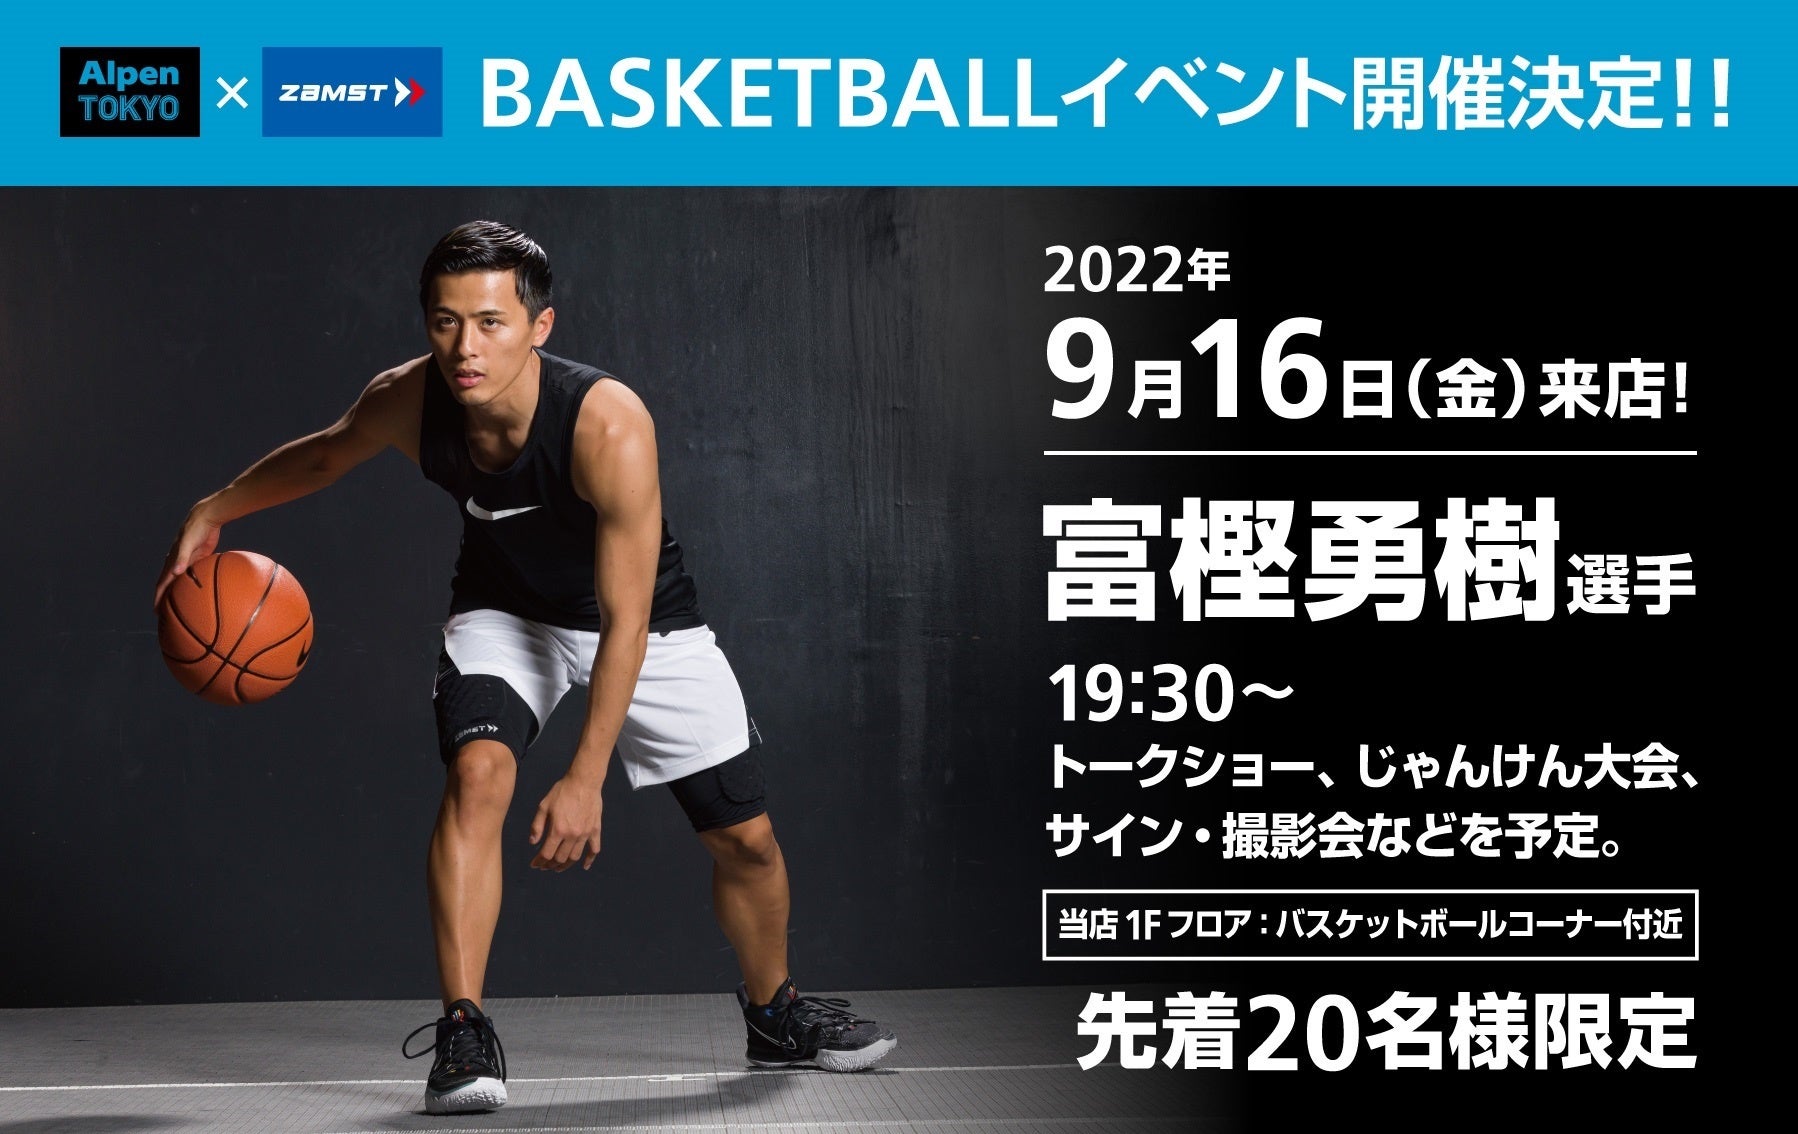 ZAMSTが契約するプロバスケットボールプレイヤー 富樫勇樹選手のトークイベントをアルペン史上最大の旗艦店「Alpen TOKYO」にて開催のサブ画像1